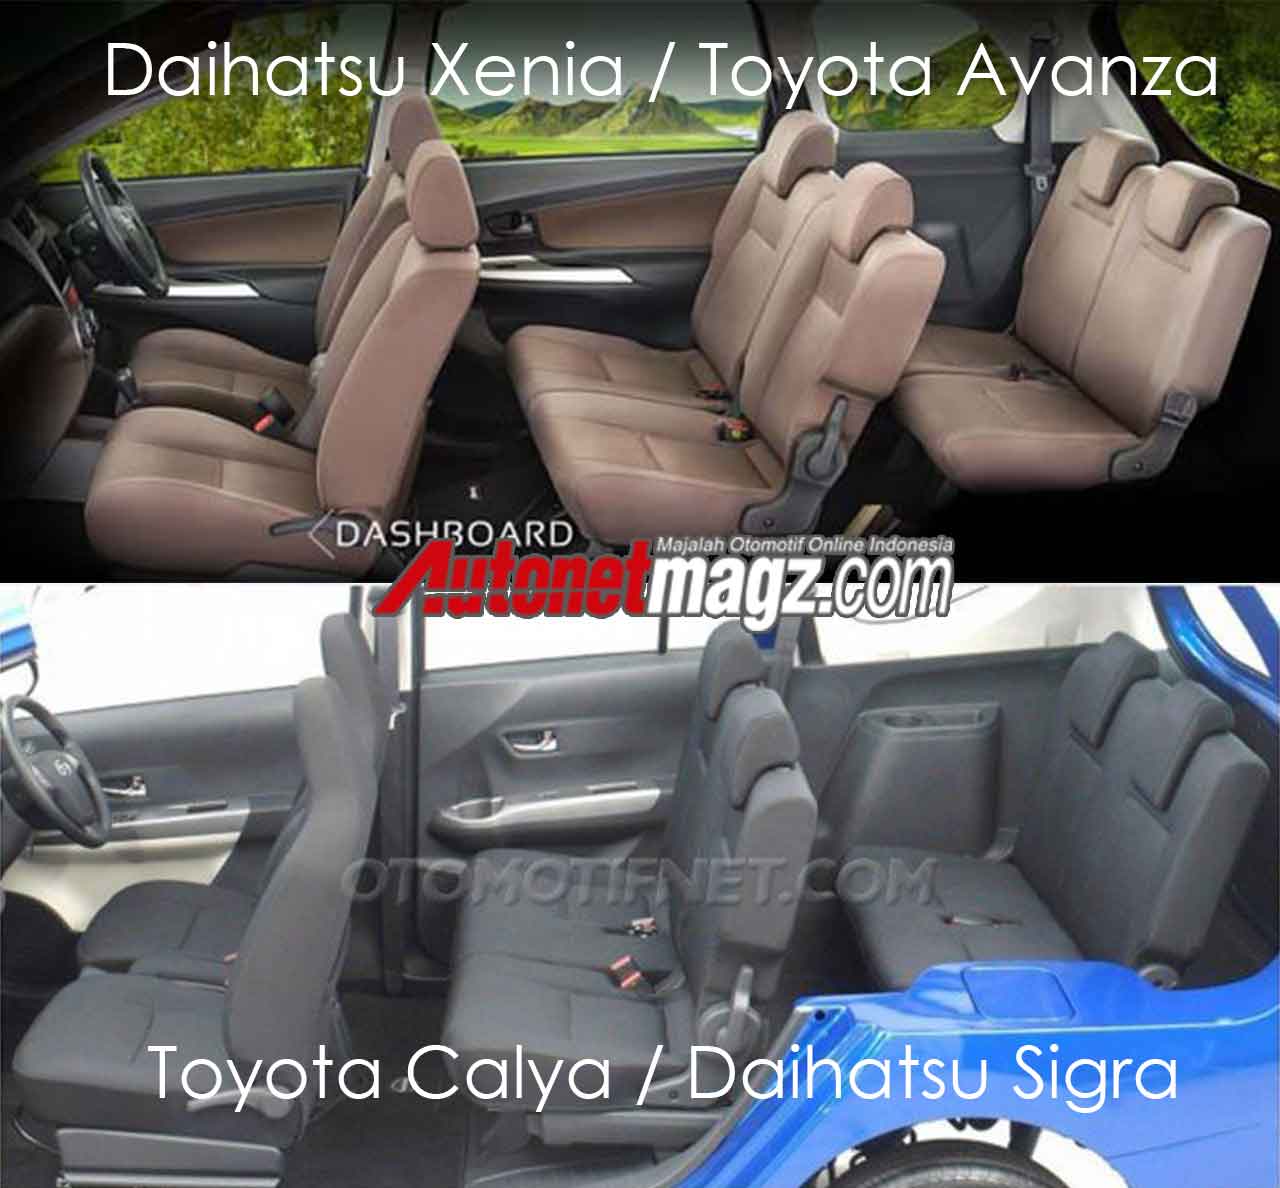 Kelegaan Kabin Avanza Vs Calya AutonetMagz Review Mobil Dan